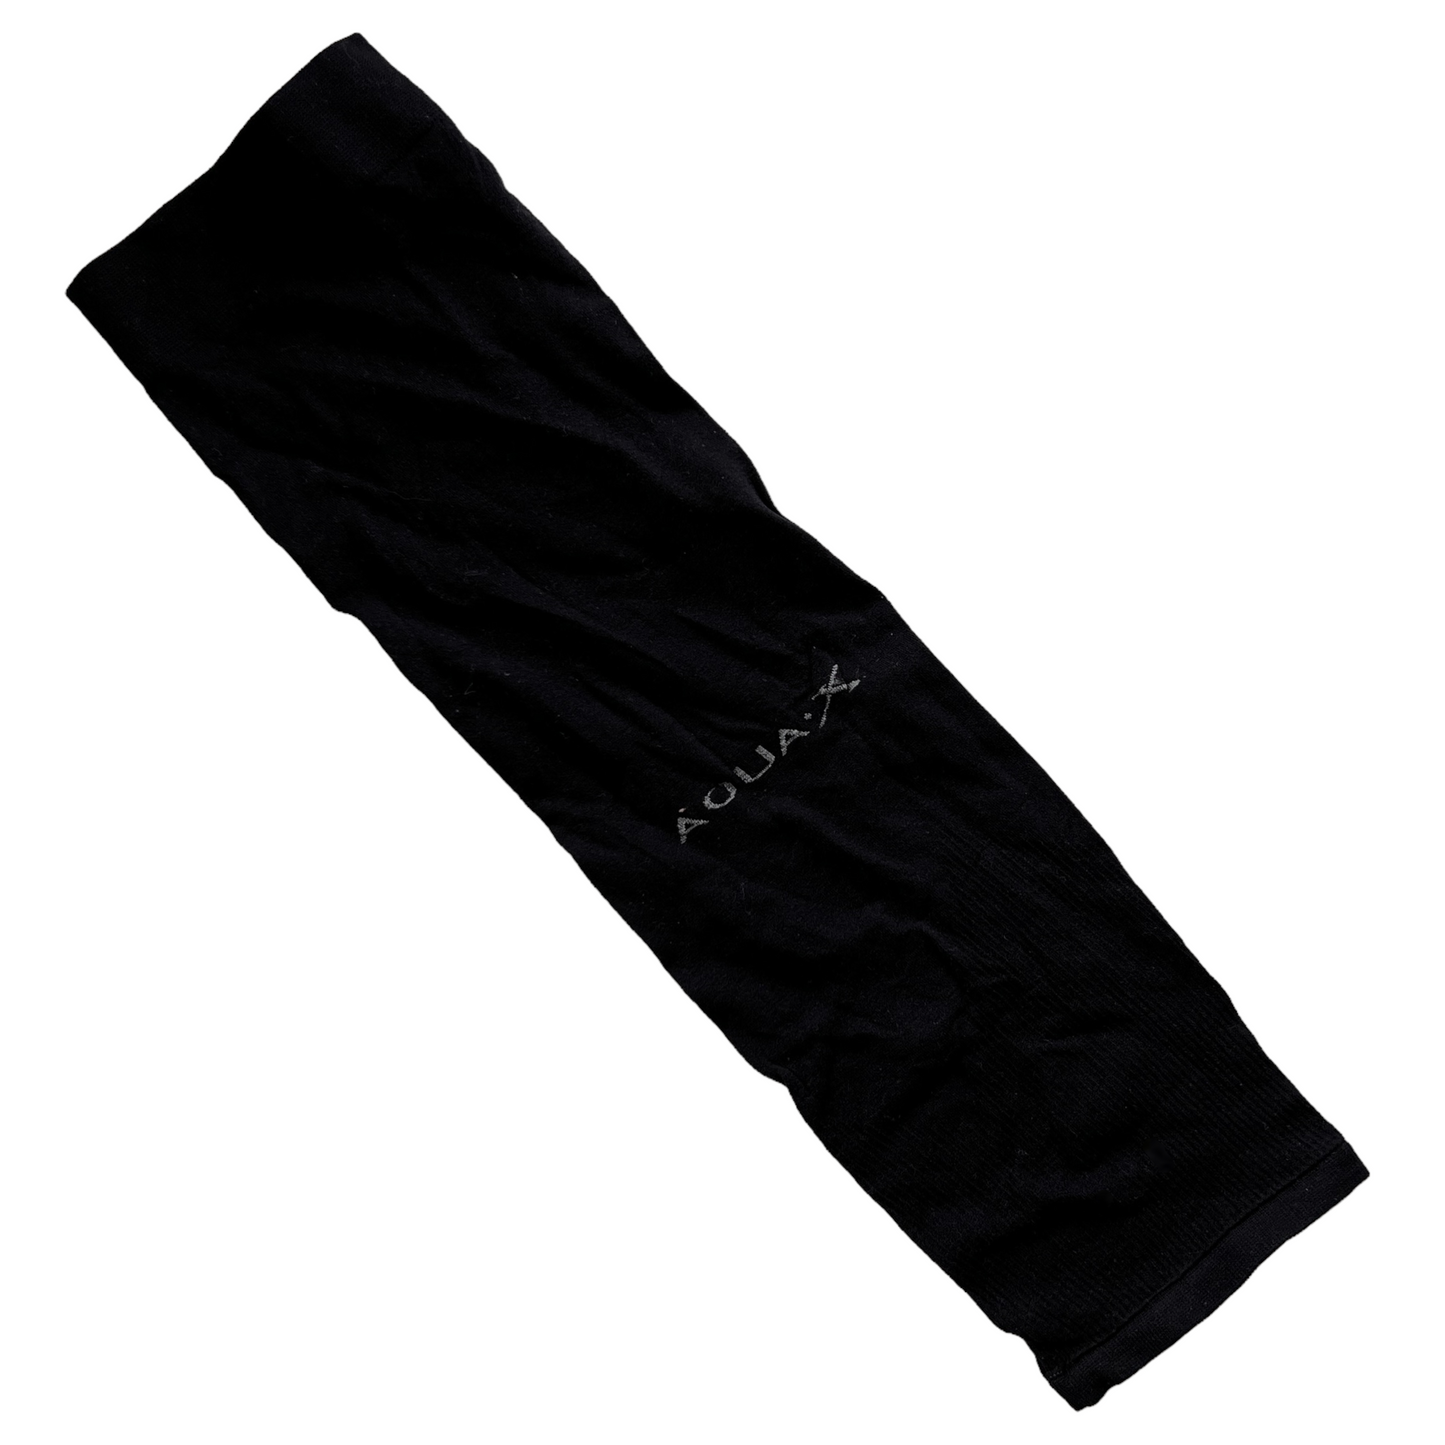 UV Sleeve — Sun, Travel, Outdoor Arm Warmers & Sleeves SPIRIT SPARKPLUGS Black  